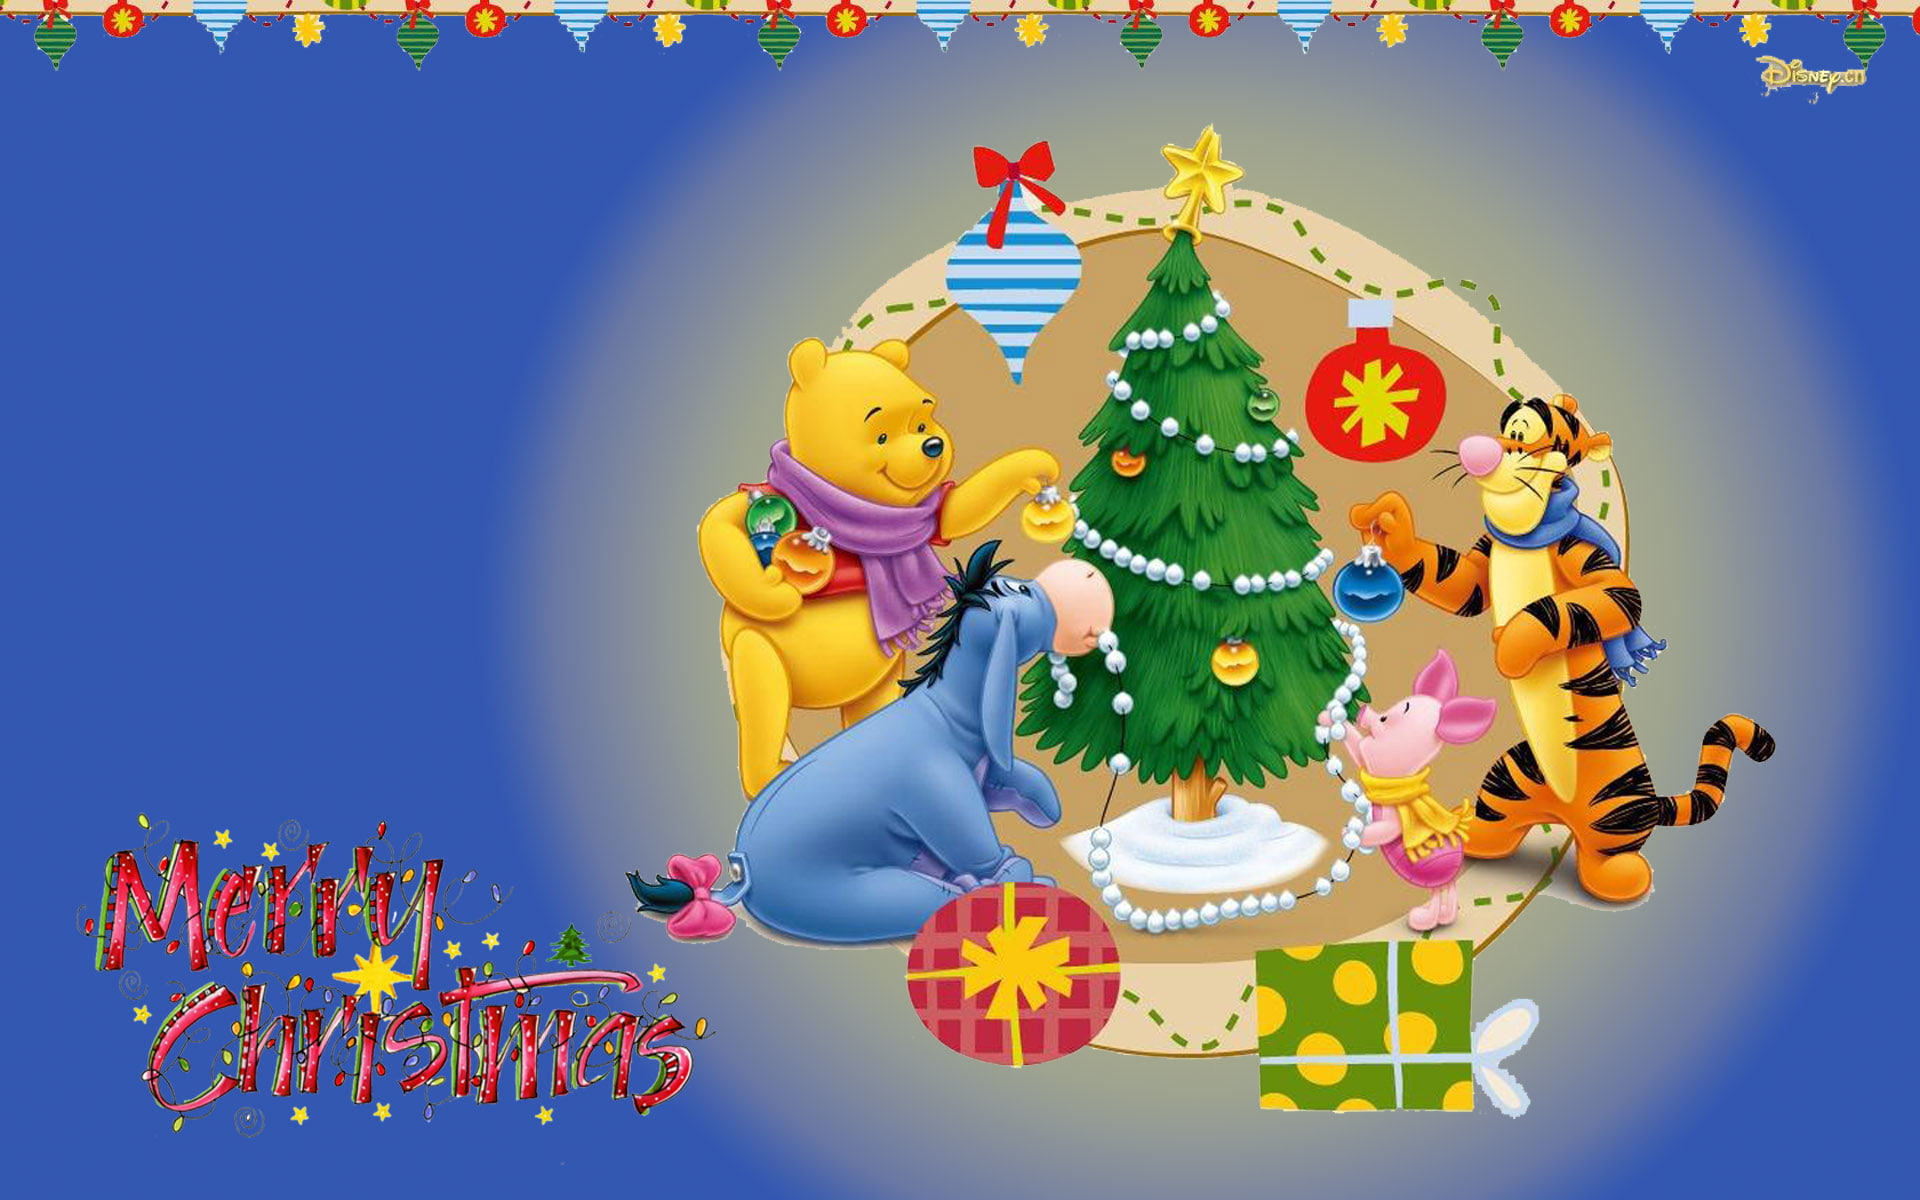 Merry Christmas Winnie The Pooh Decorating The Christmas Tree, Gifts, Cartoon Photo Desktop Hd Wallpaper 1920×1200